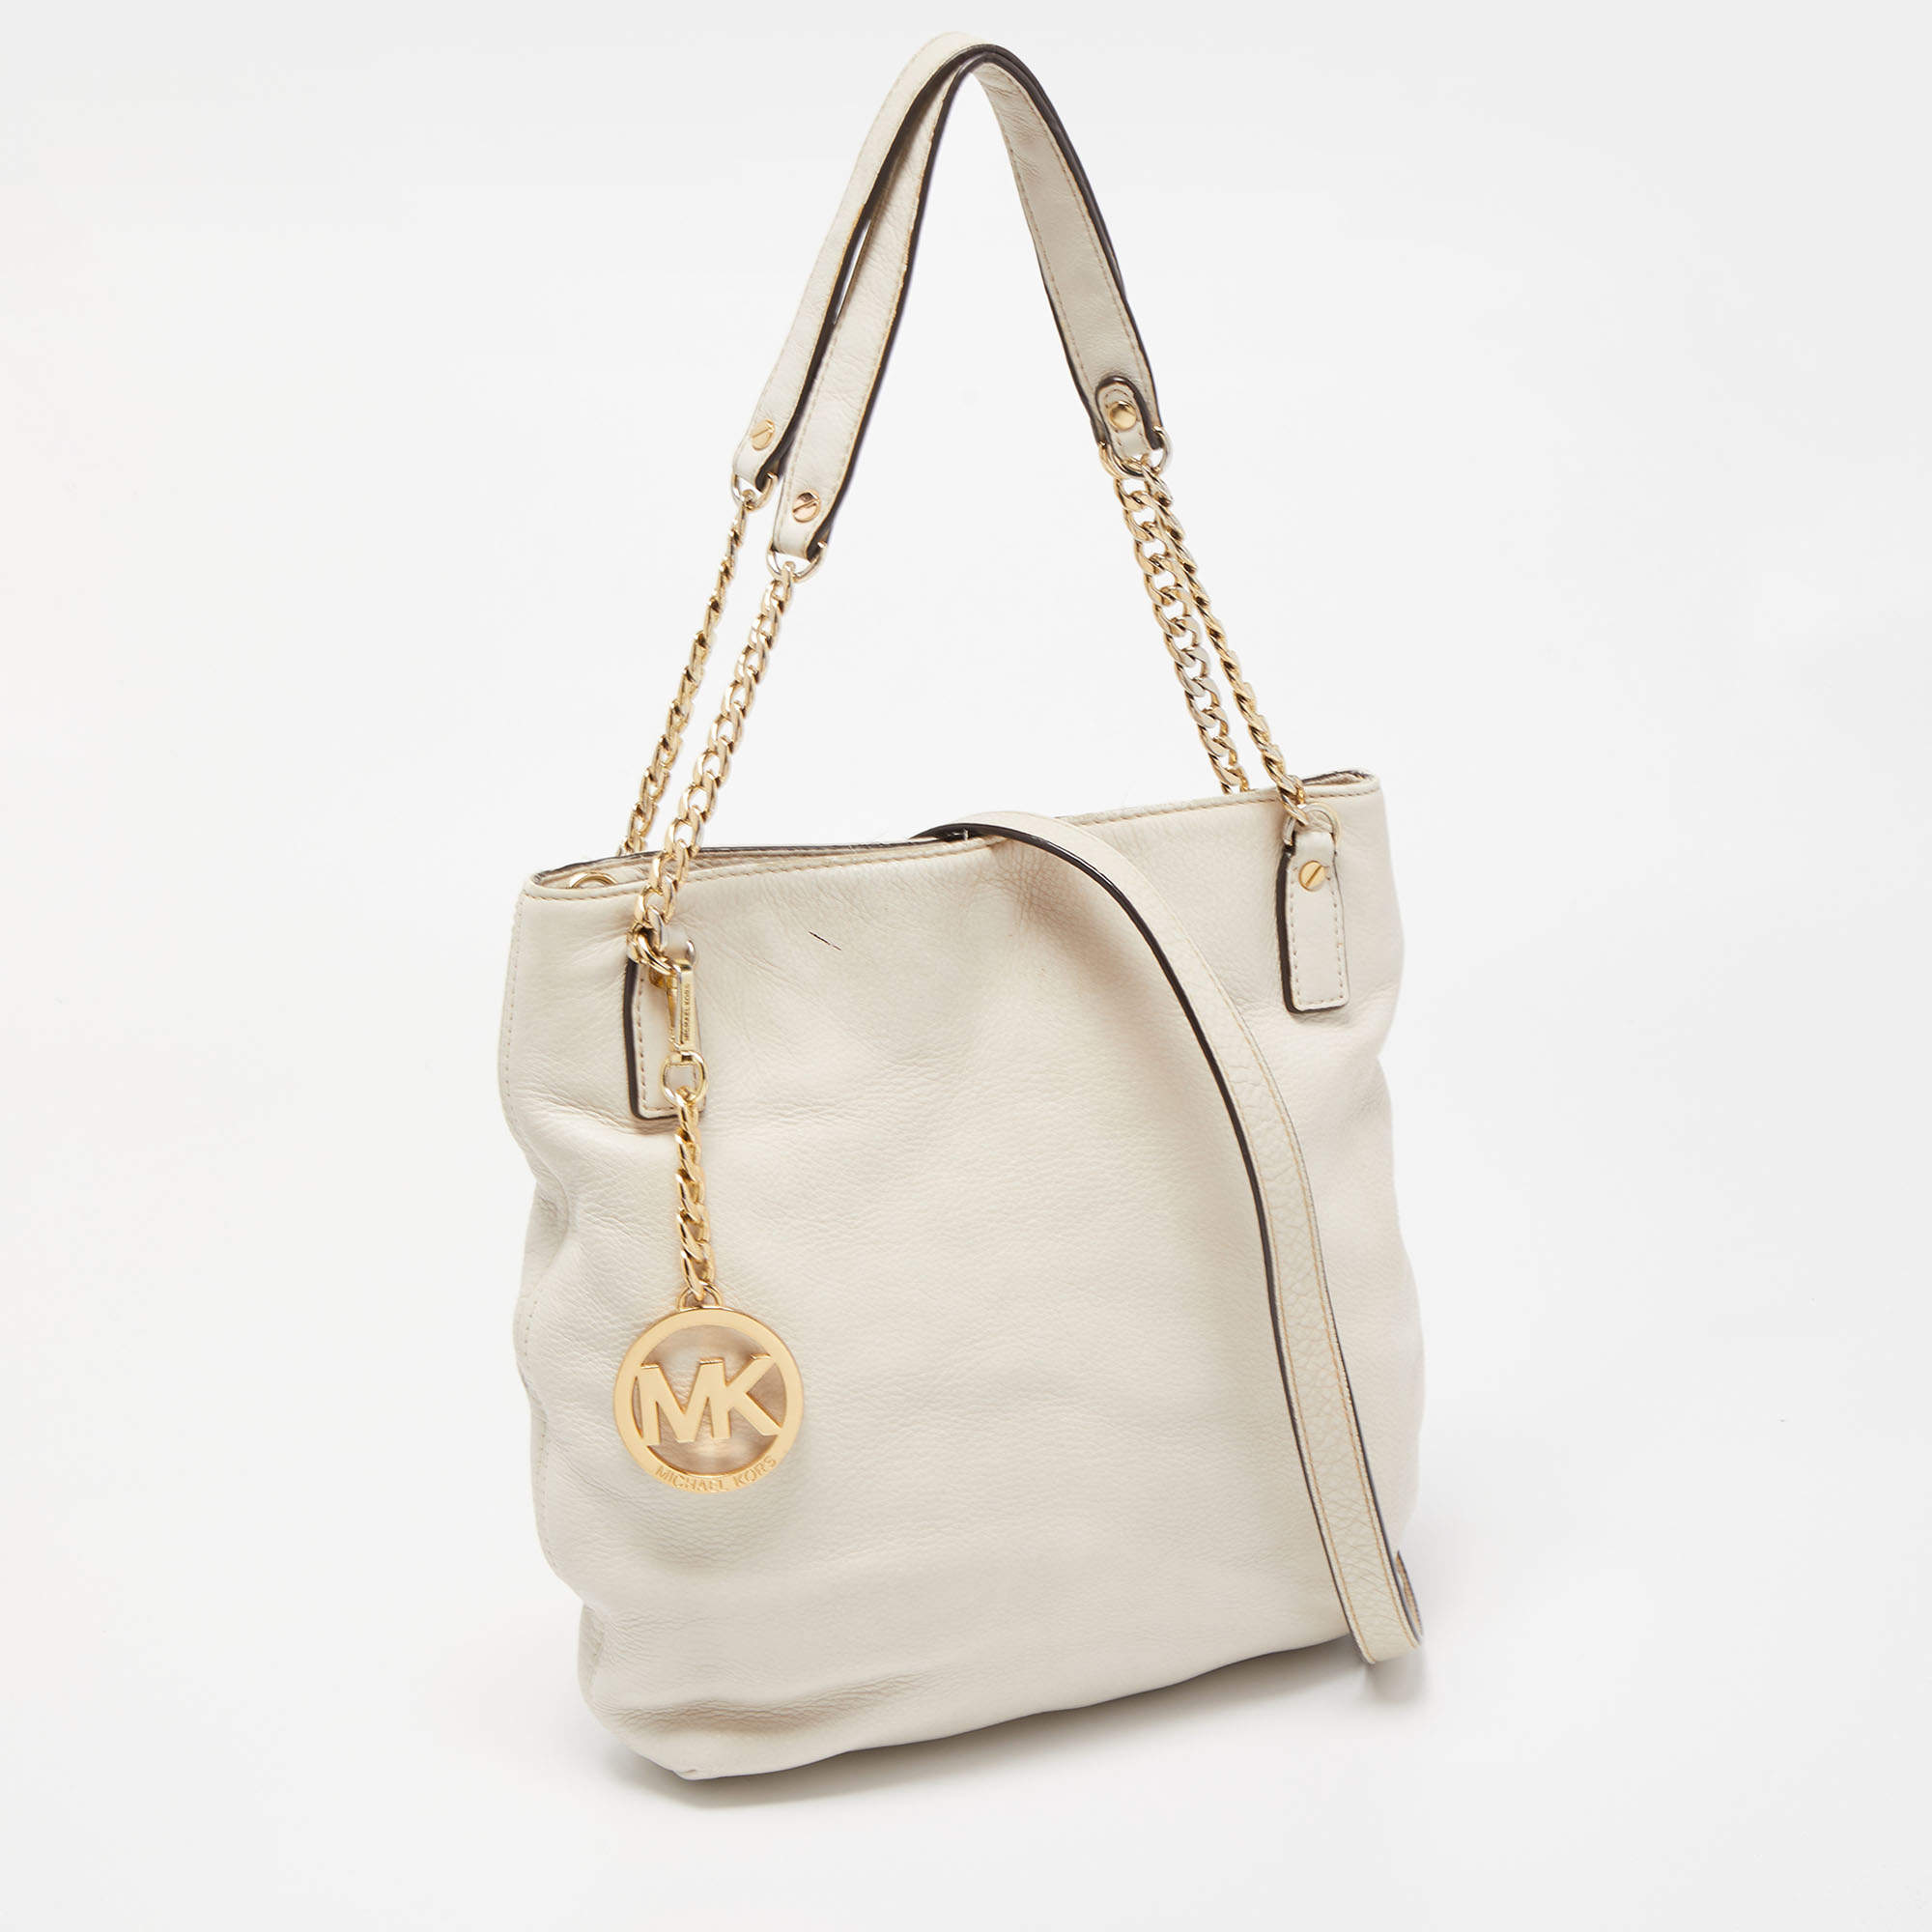 MICHAEL KORS: Michael bag in saffiano leather - White | MICHAEL KORS handbag  30S3GR0S1L online at GIGLIO.COM